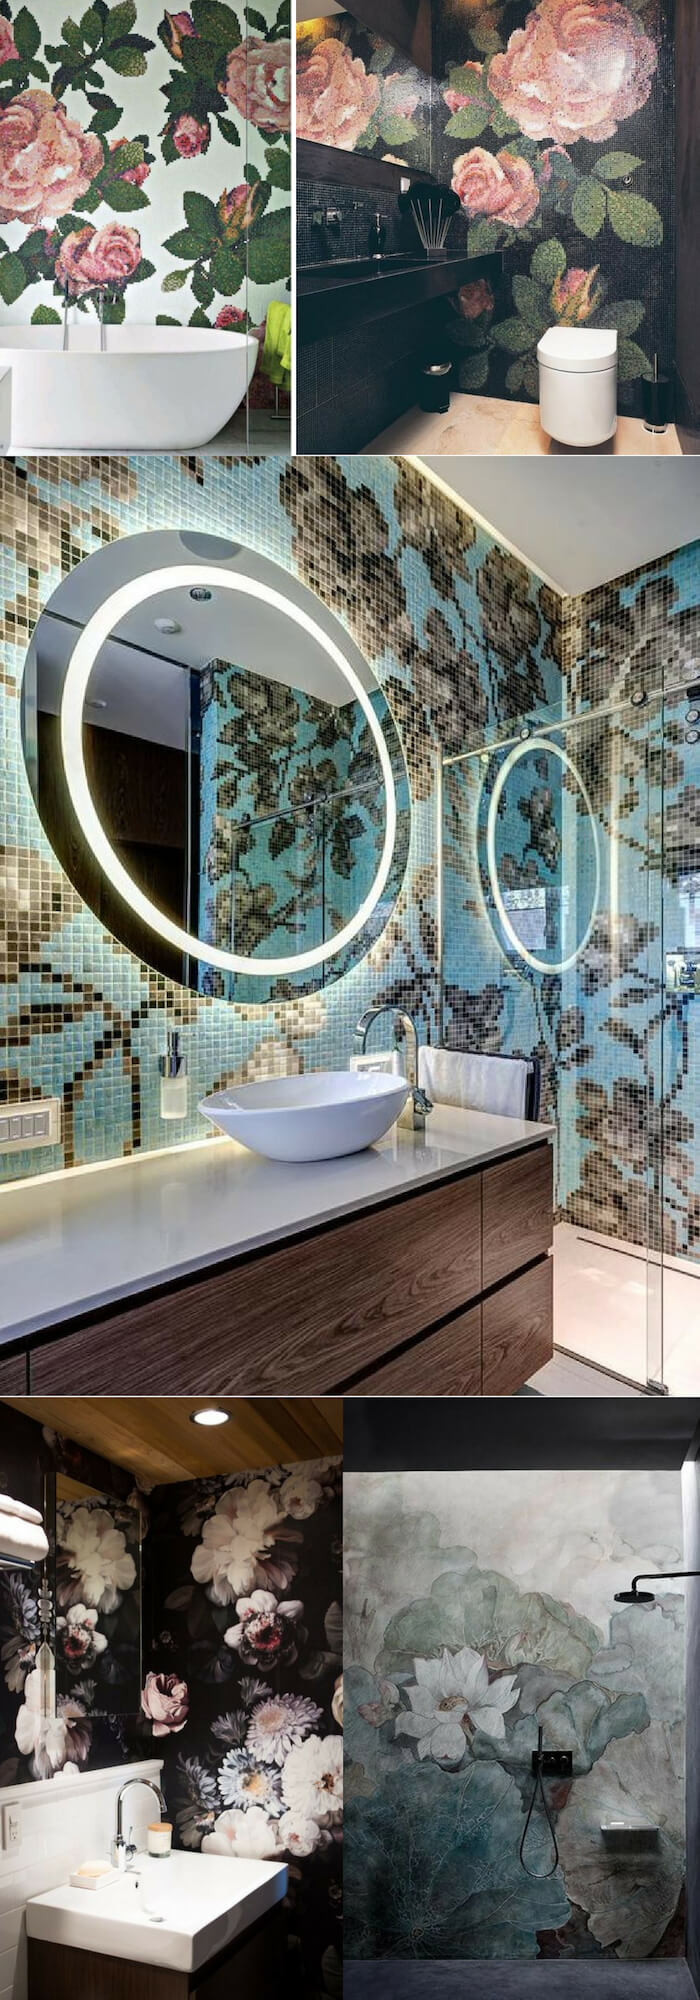 Flower wall | Unique Wall Tile Ideas for Bathroom Design